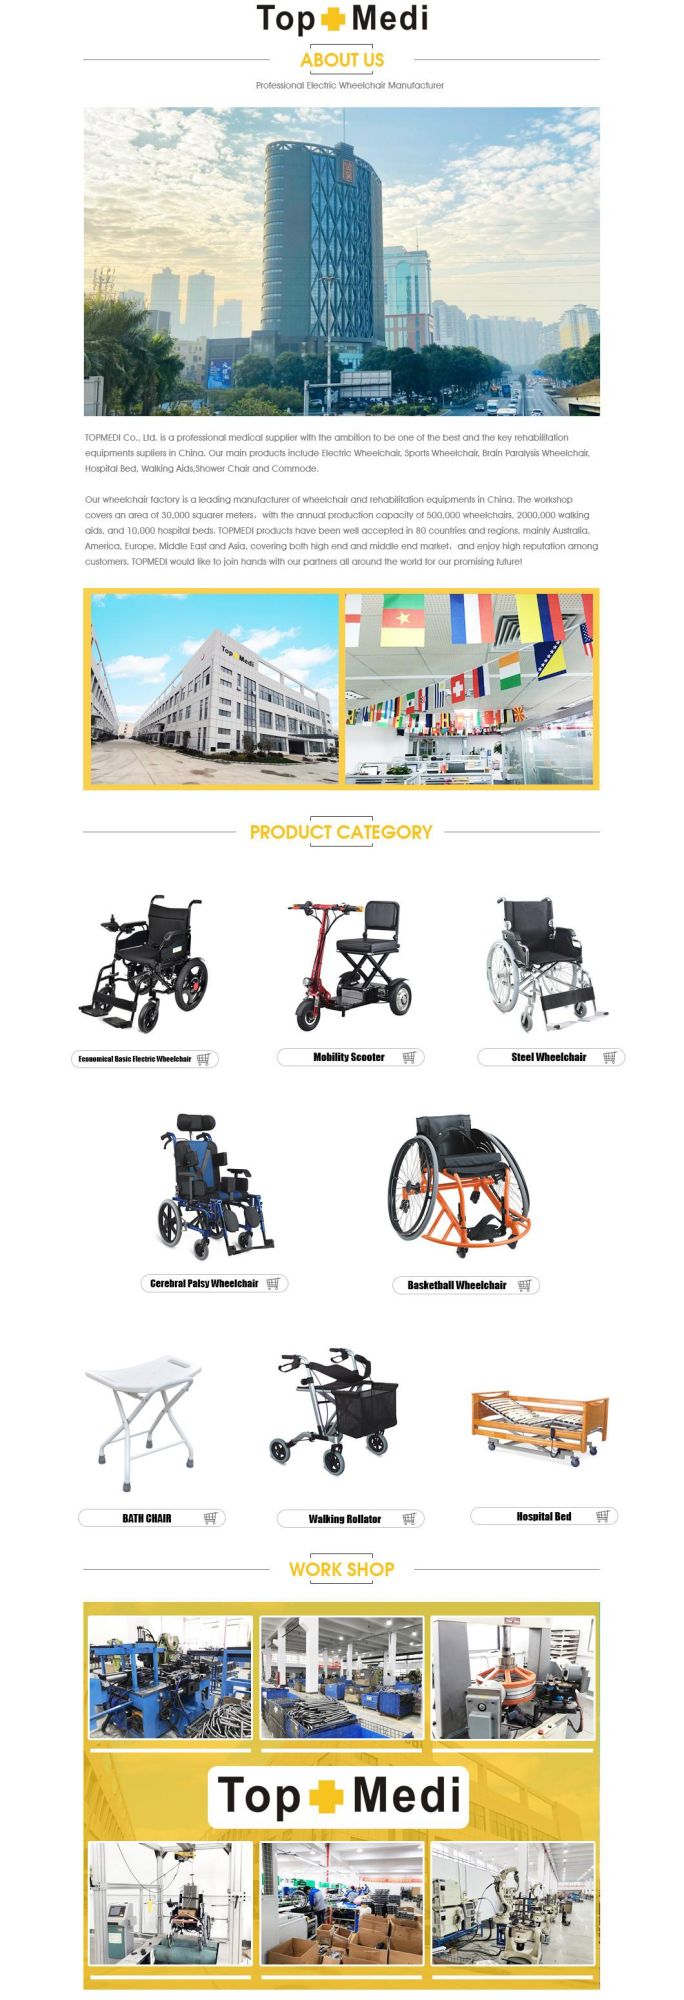 Guangzhou Manufacturer Manual Steel Wheelchair for Disabilities